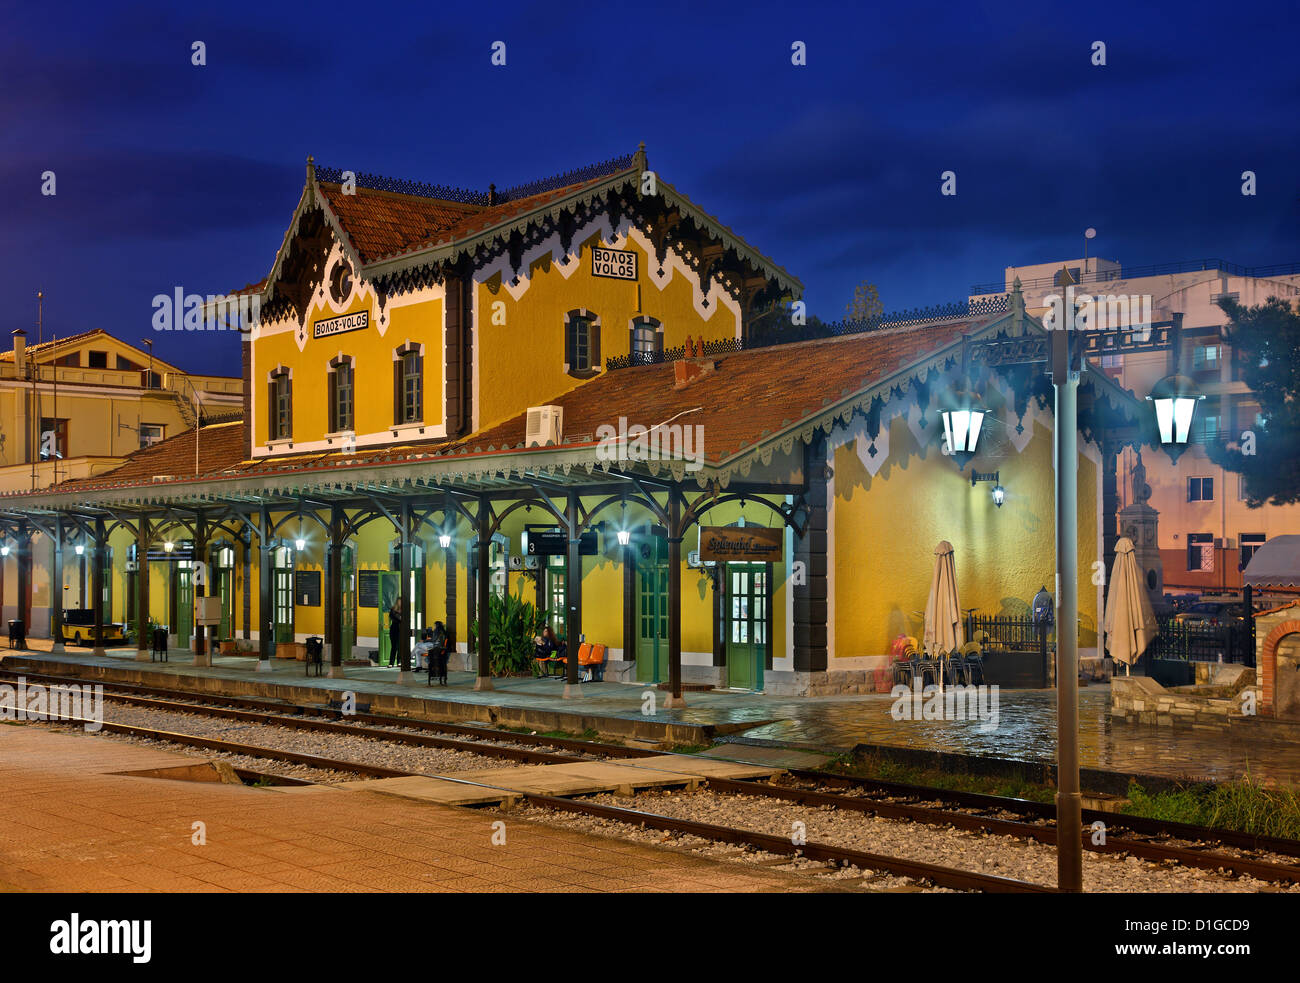 The train station of Volos (Greece), designed by Evaristo de Chirico, father of the famous painter, Giorgio de Chirico. Stock Photo